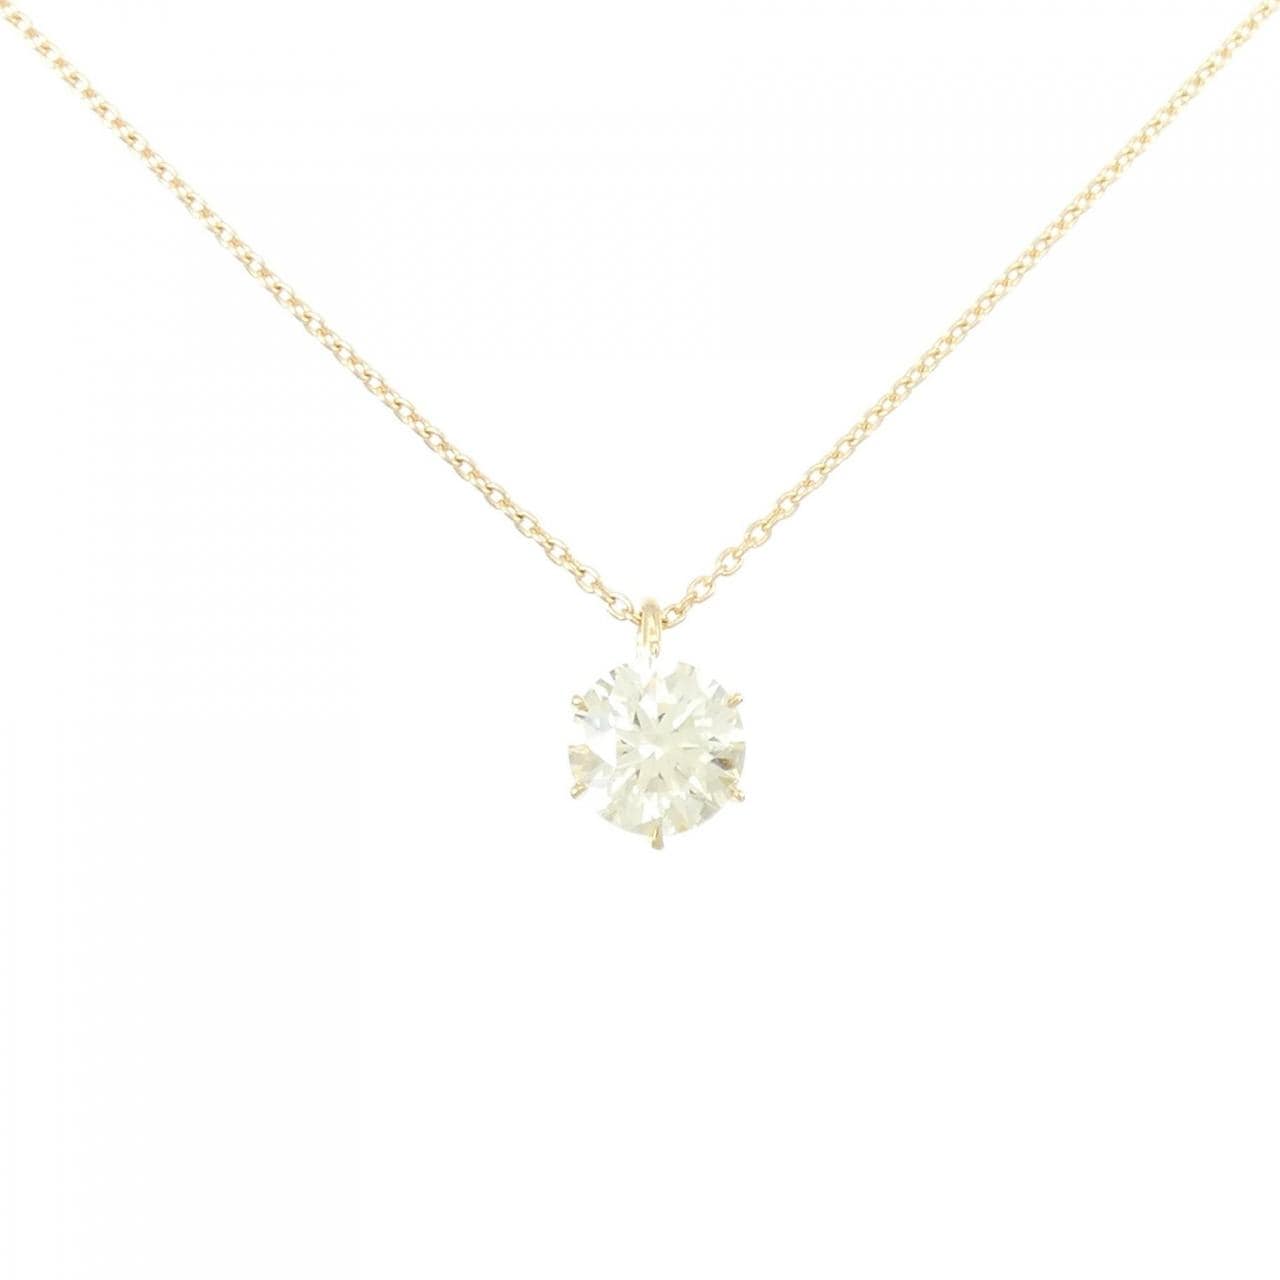 [Remake] K18YG Diamond Necklace 1.183CT LY VS1 EXT H&C